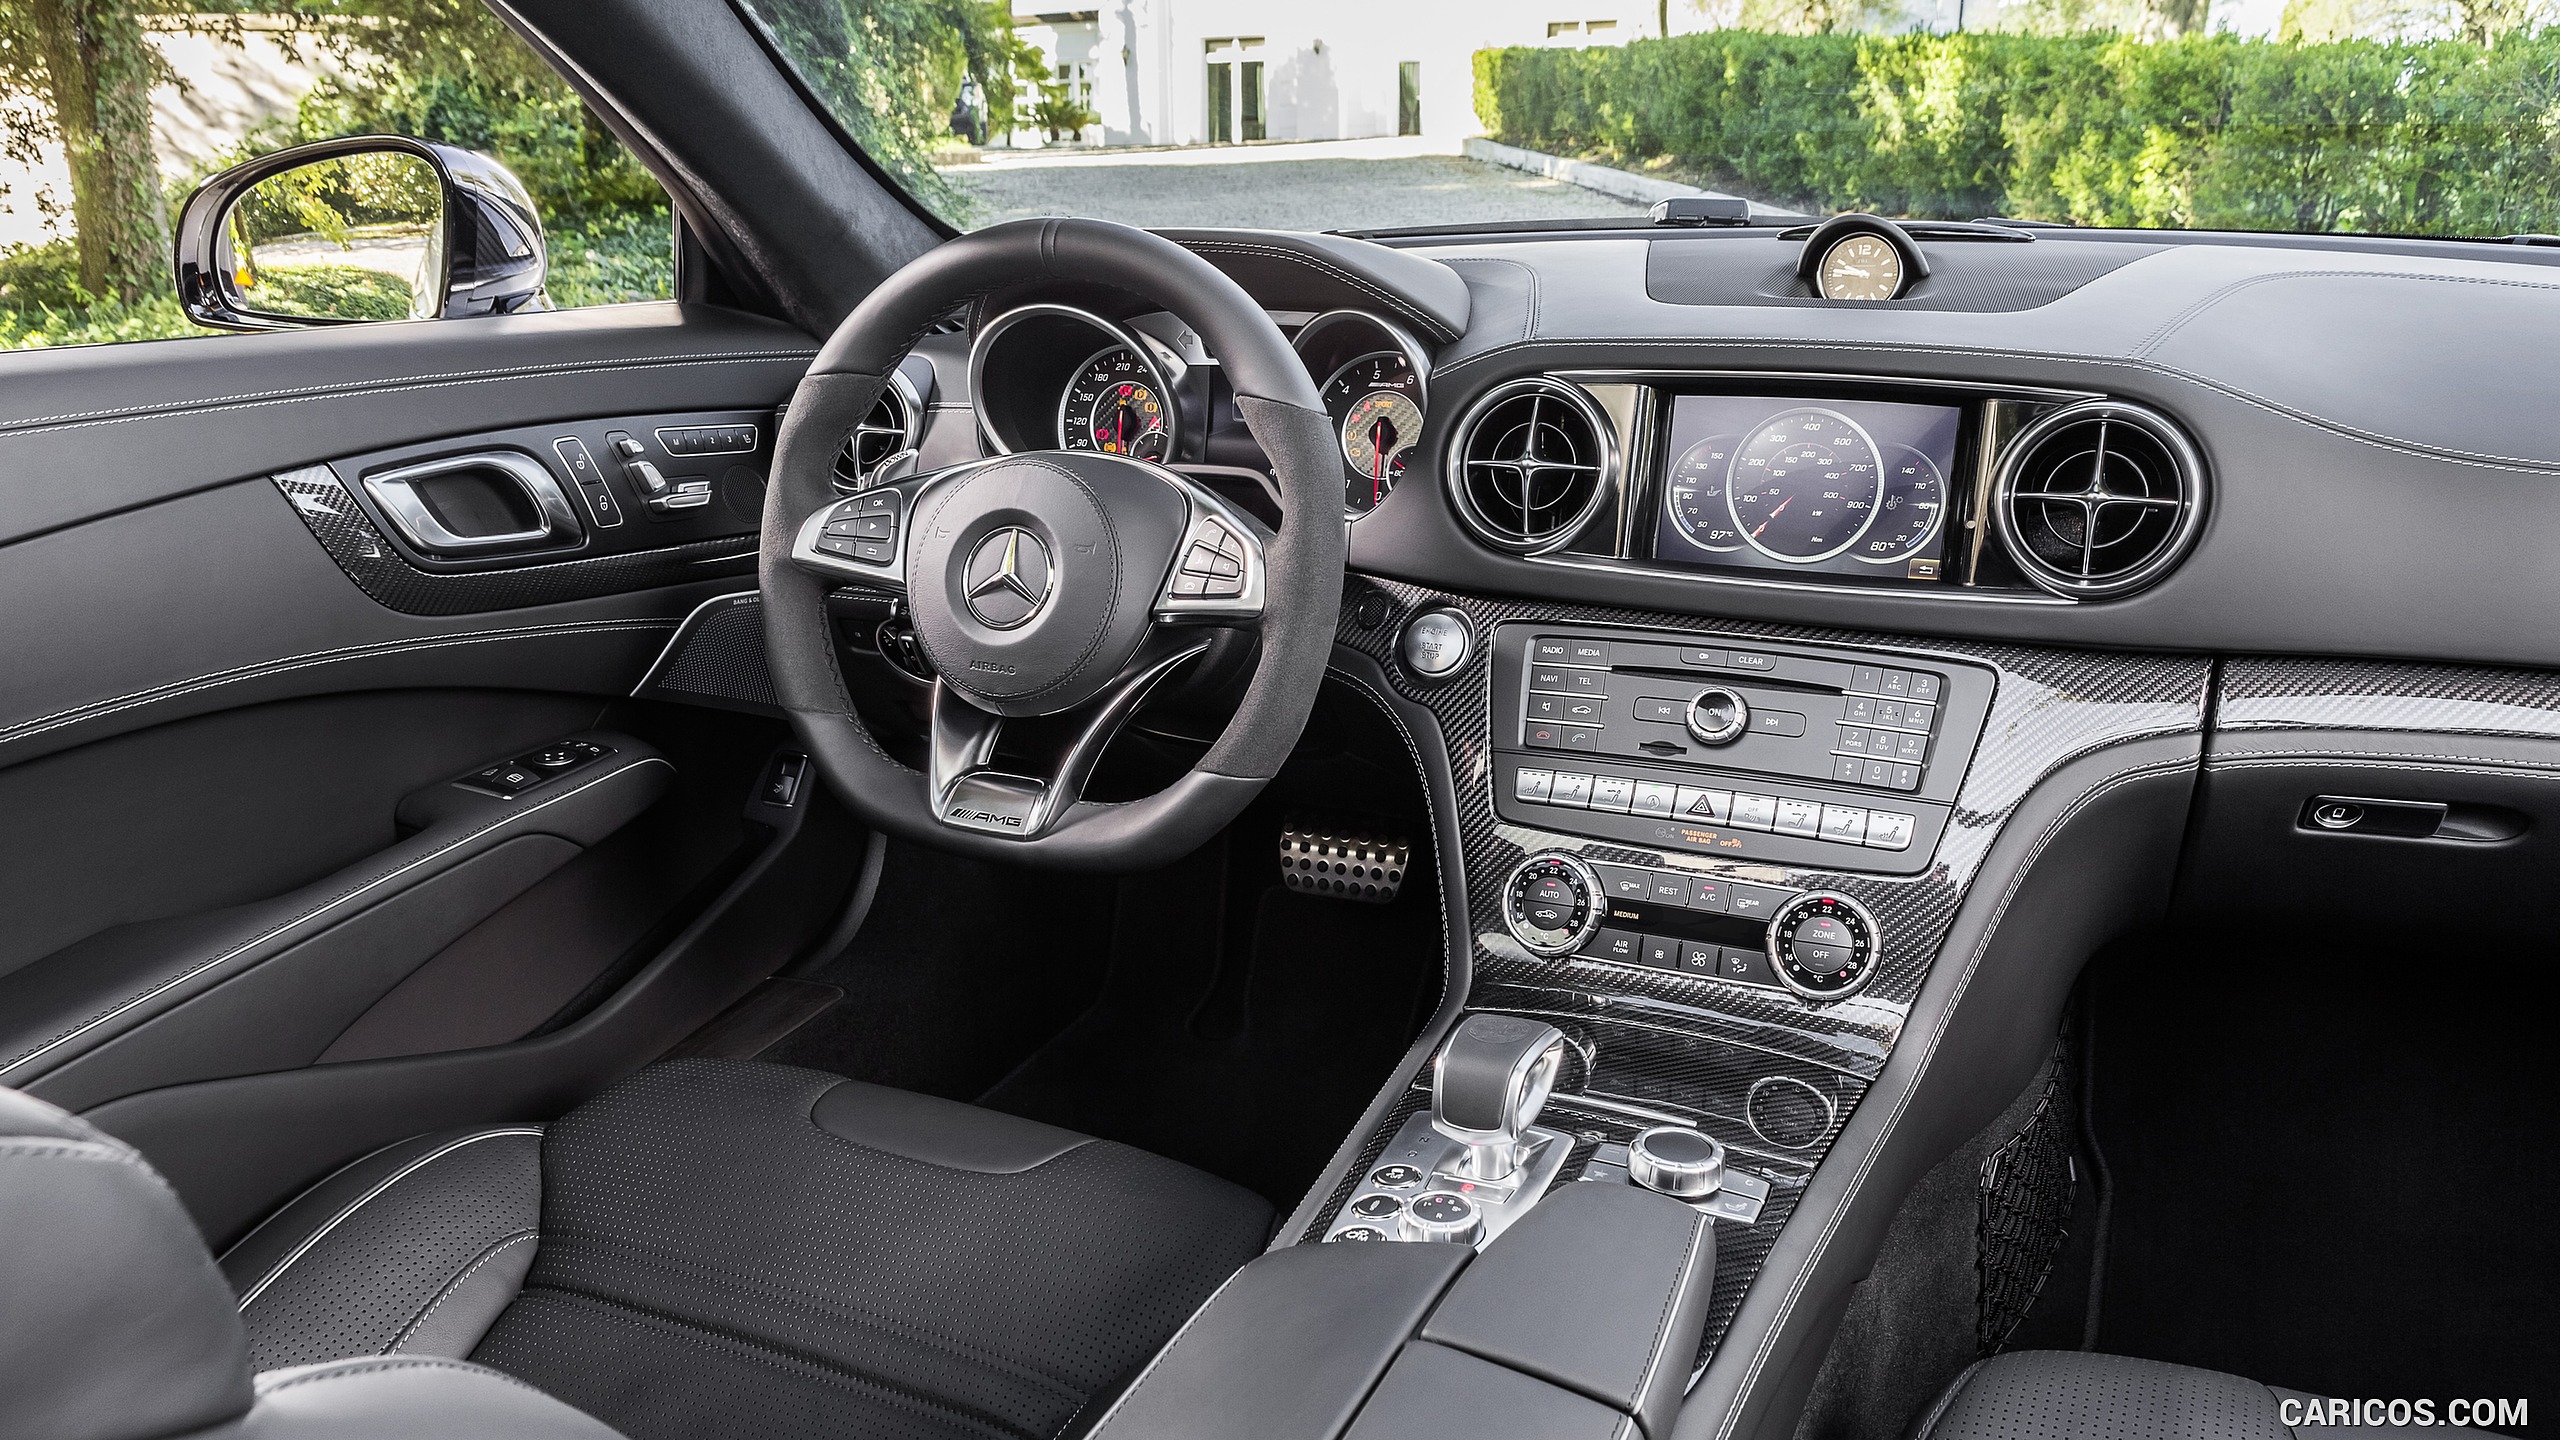 2017 Mercedes-AMG SL 63 - Leather Black Interior with AMG Carbon Trim - Interior, Cockpit, #21 of 39